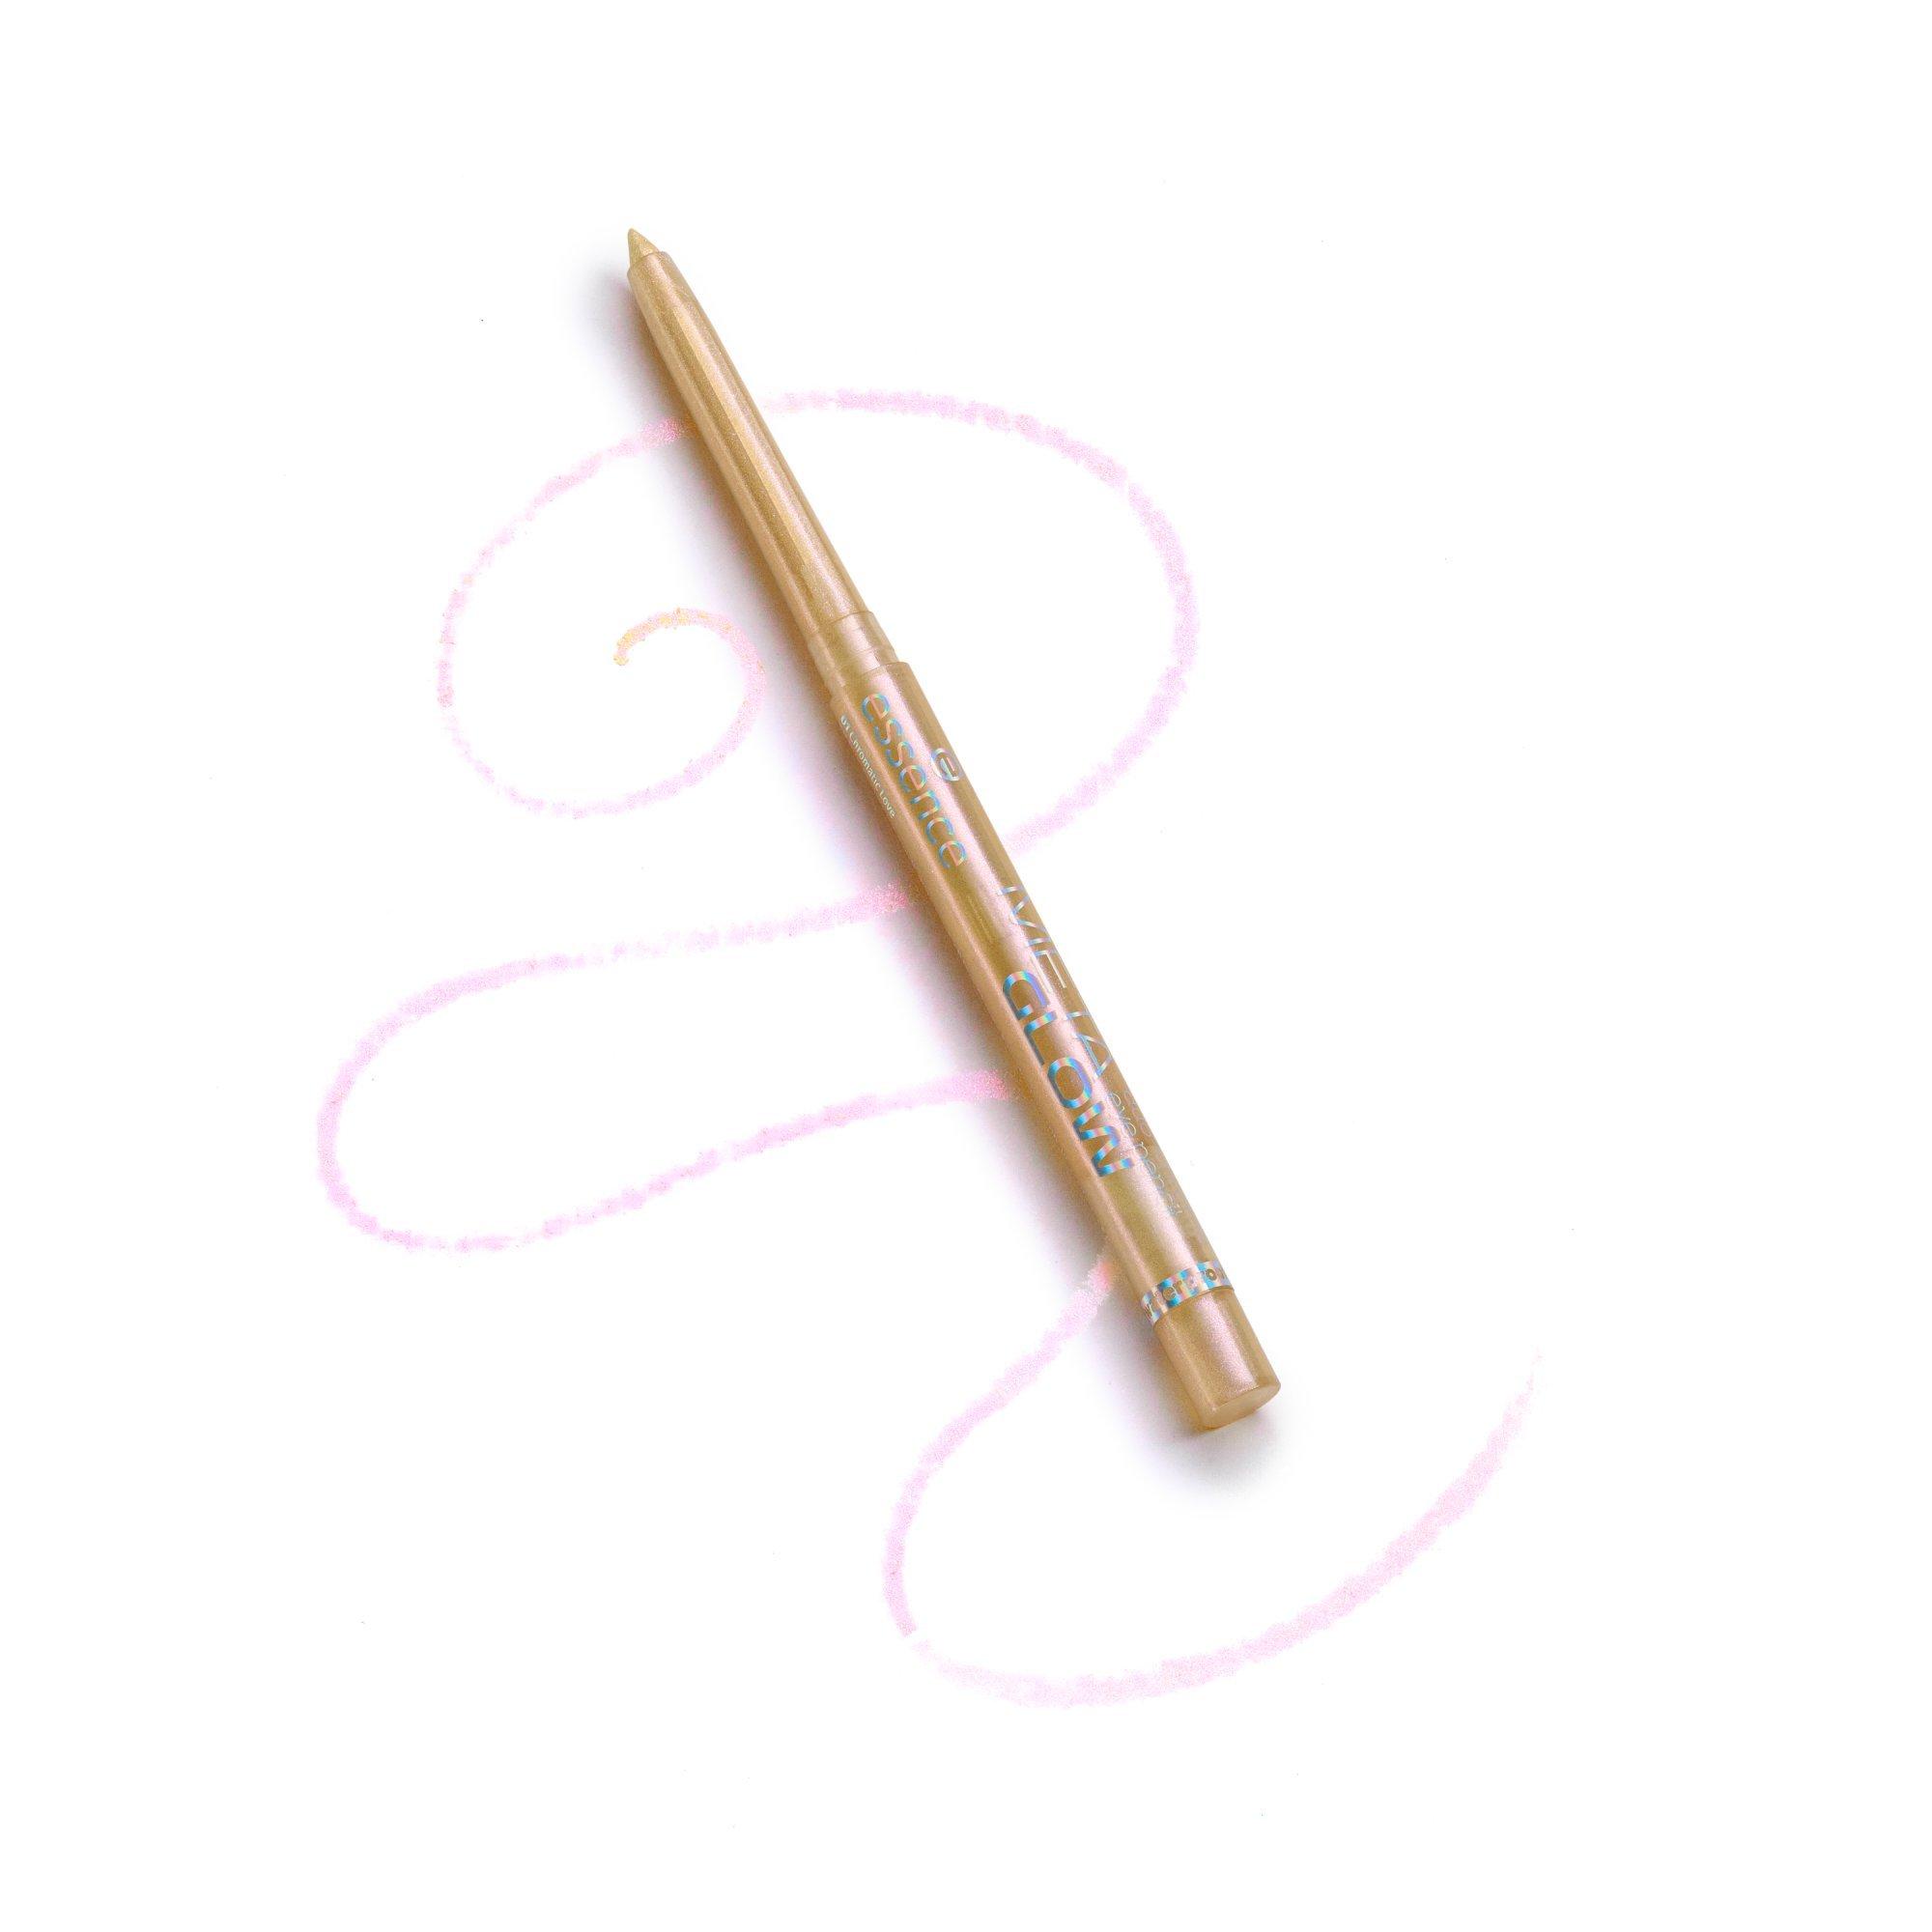 META GLOW duo-chrome eye pencil